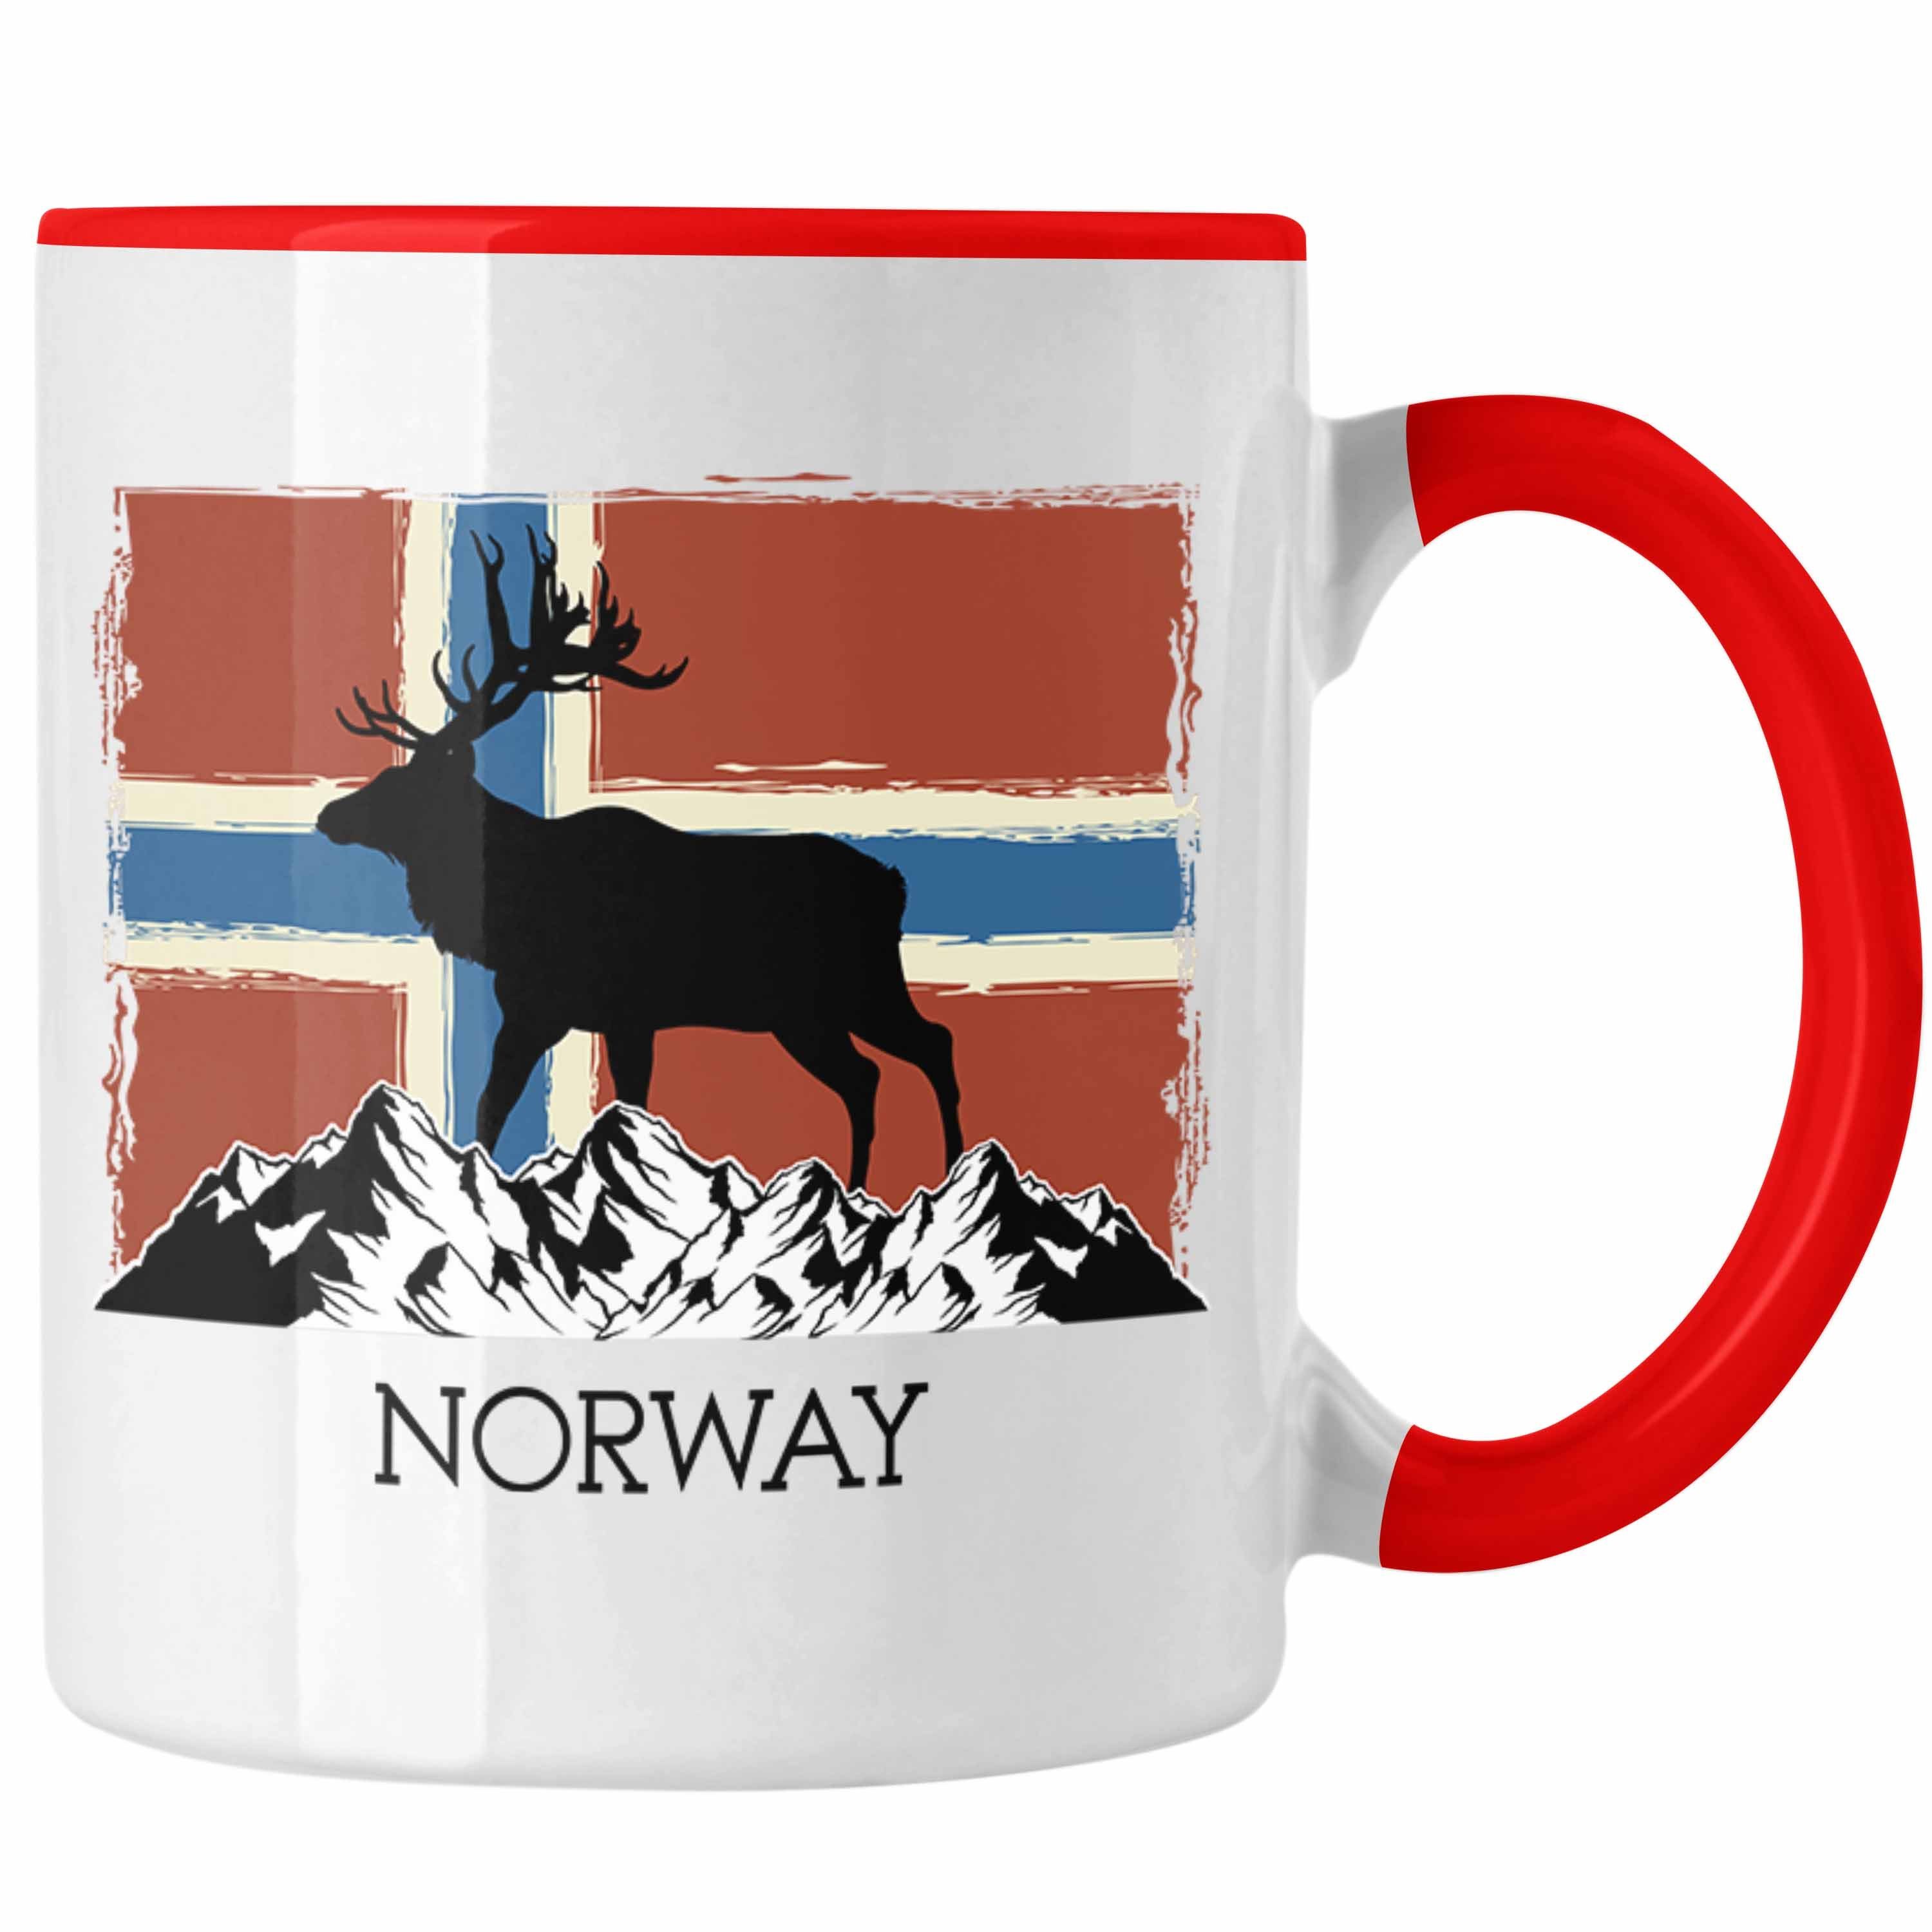 Trendation Tasse Trendation - Norwegen Geschenke Tasse Flagge Nordkap Elch Norway Rot | Teetassen